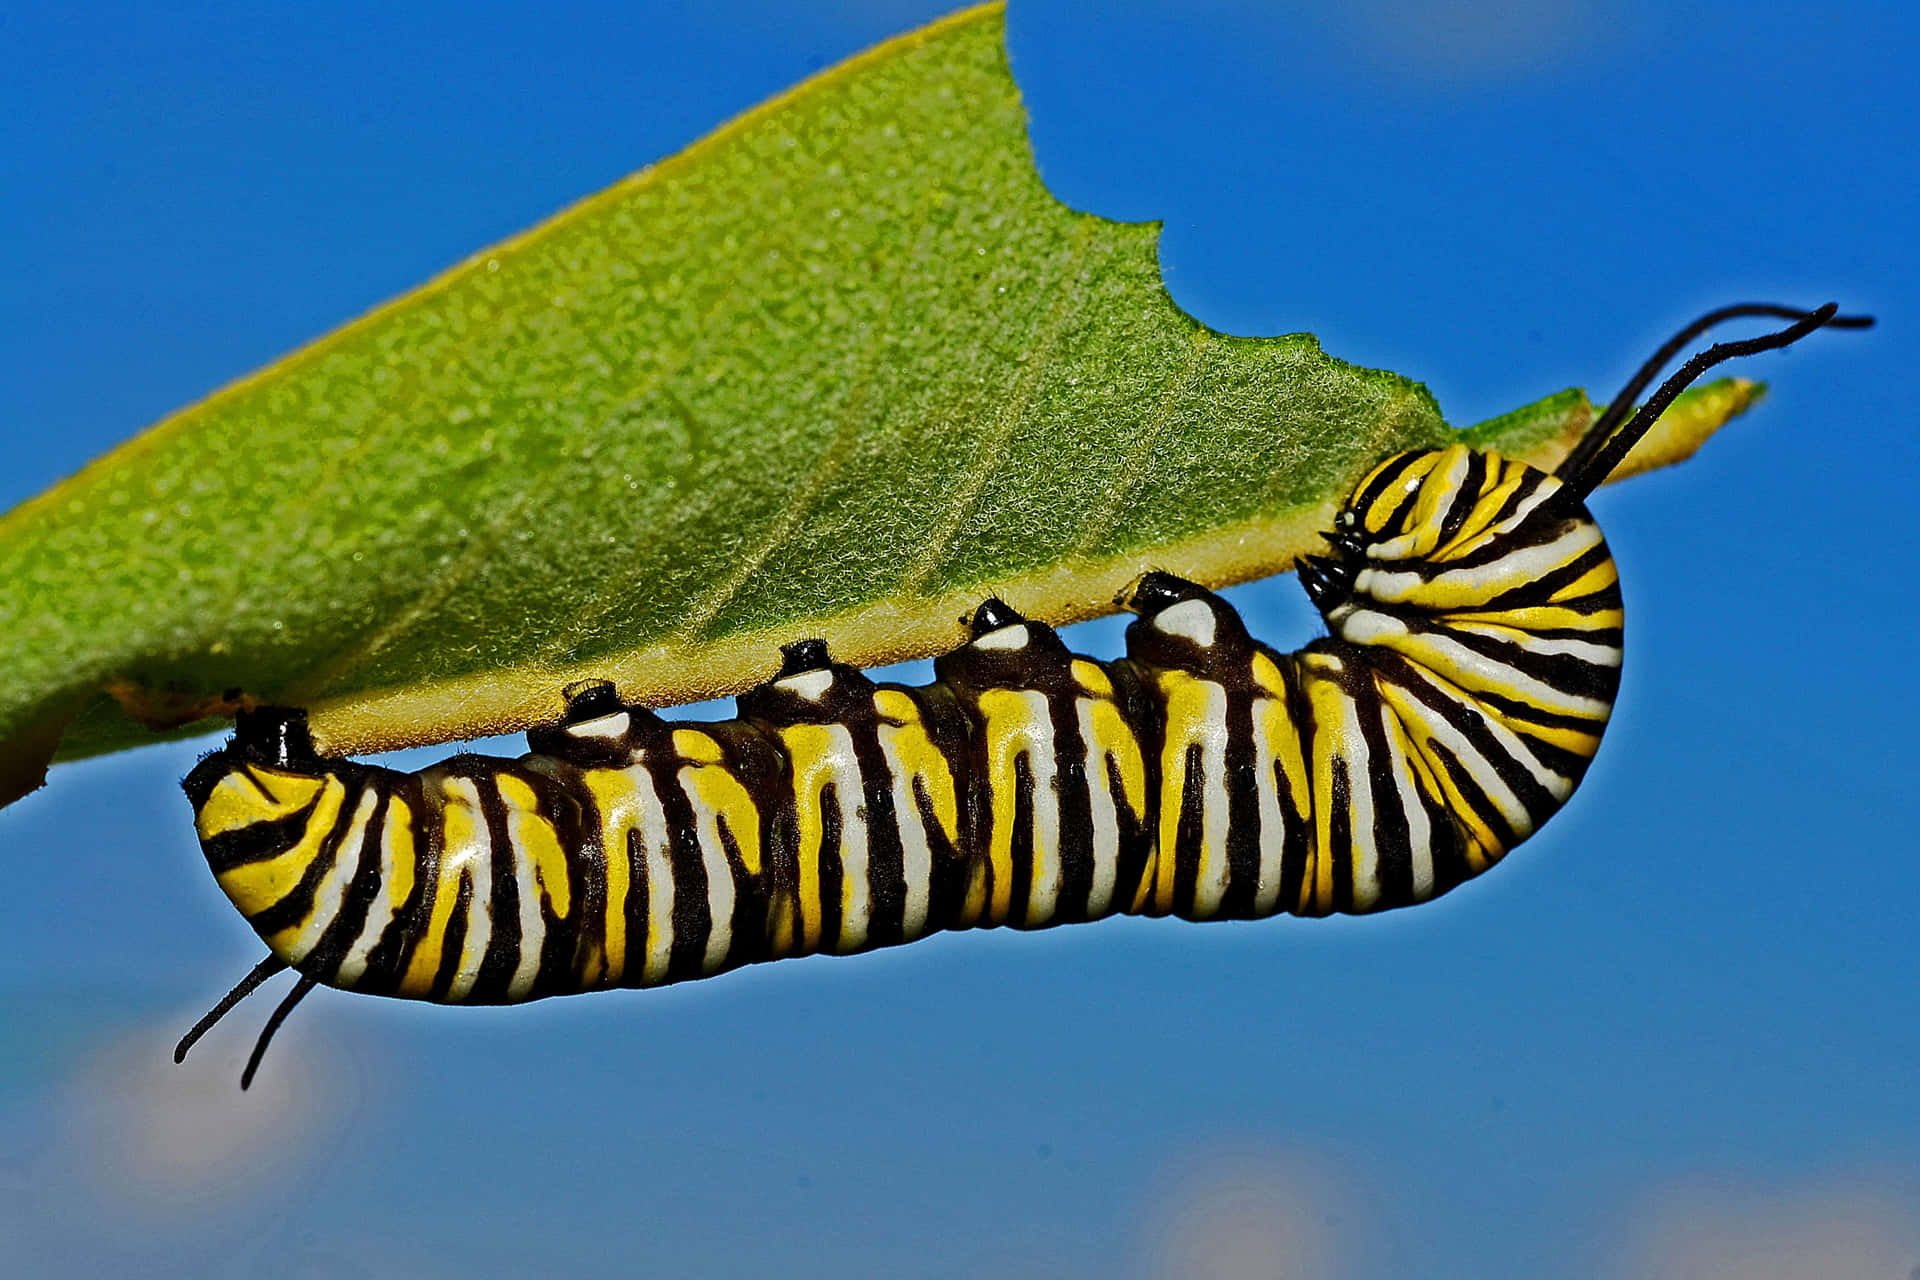 "A closeup of a brightly-colored caterpillar"